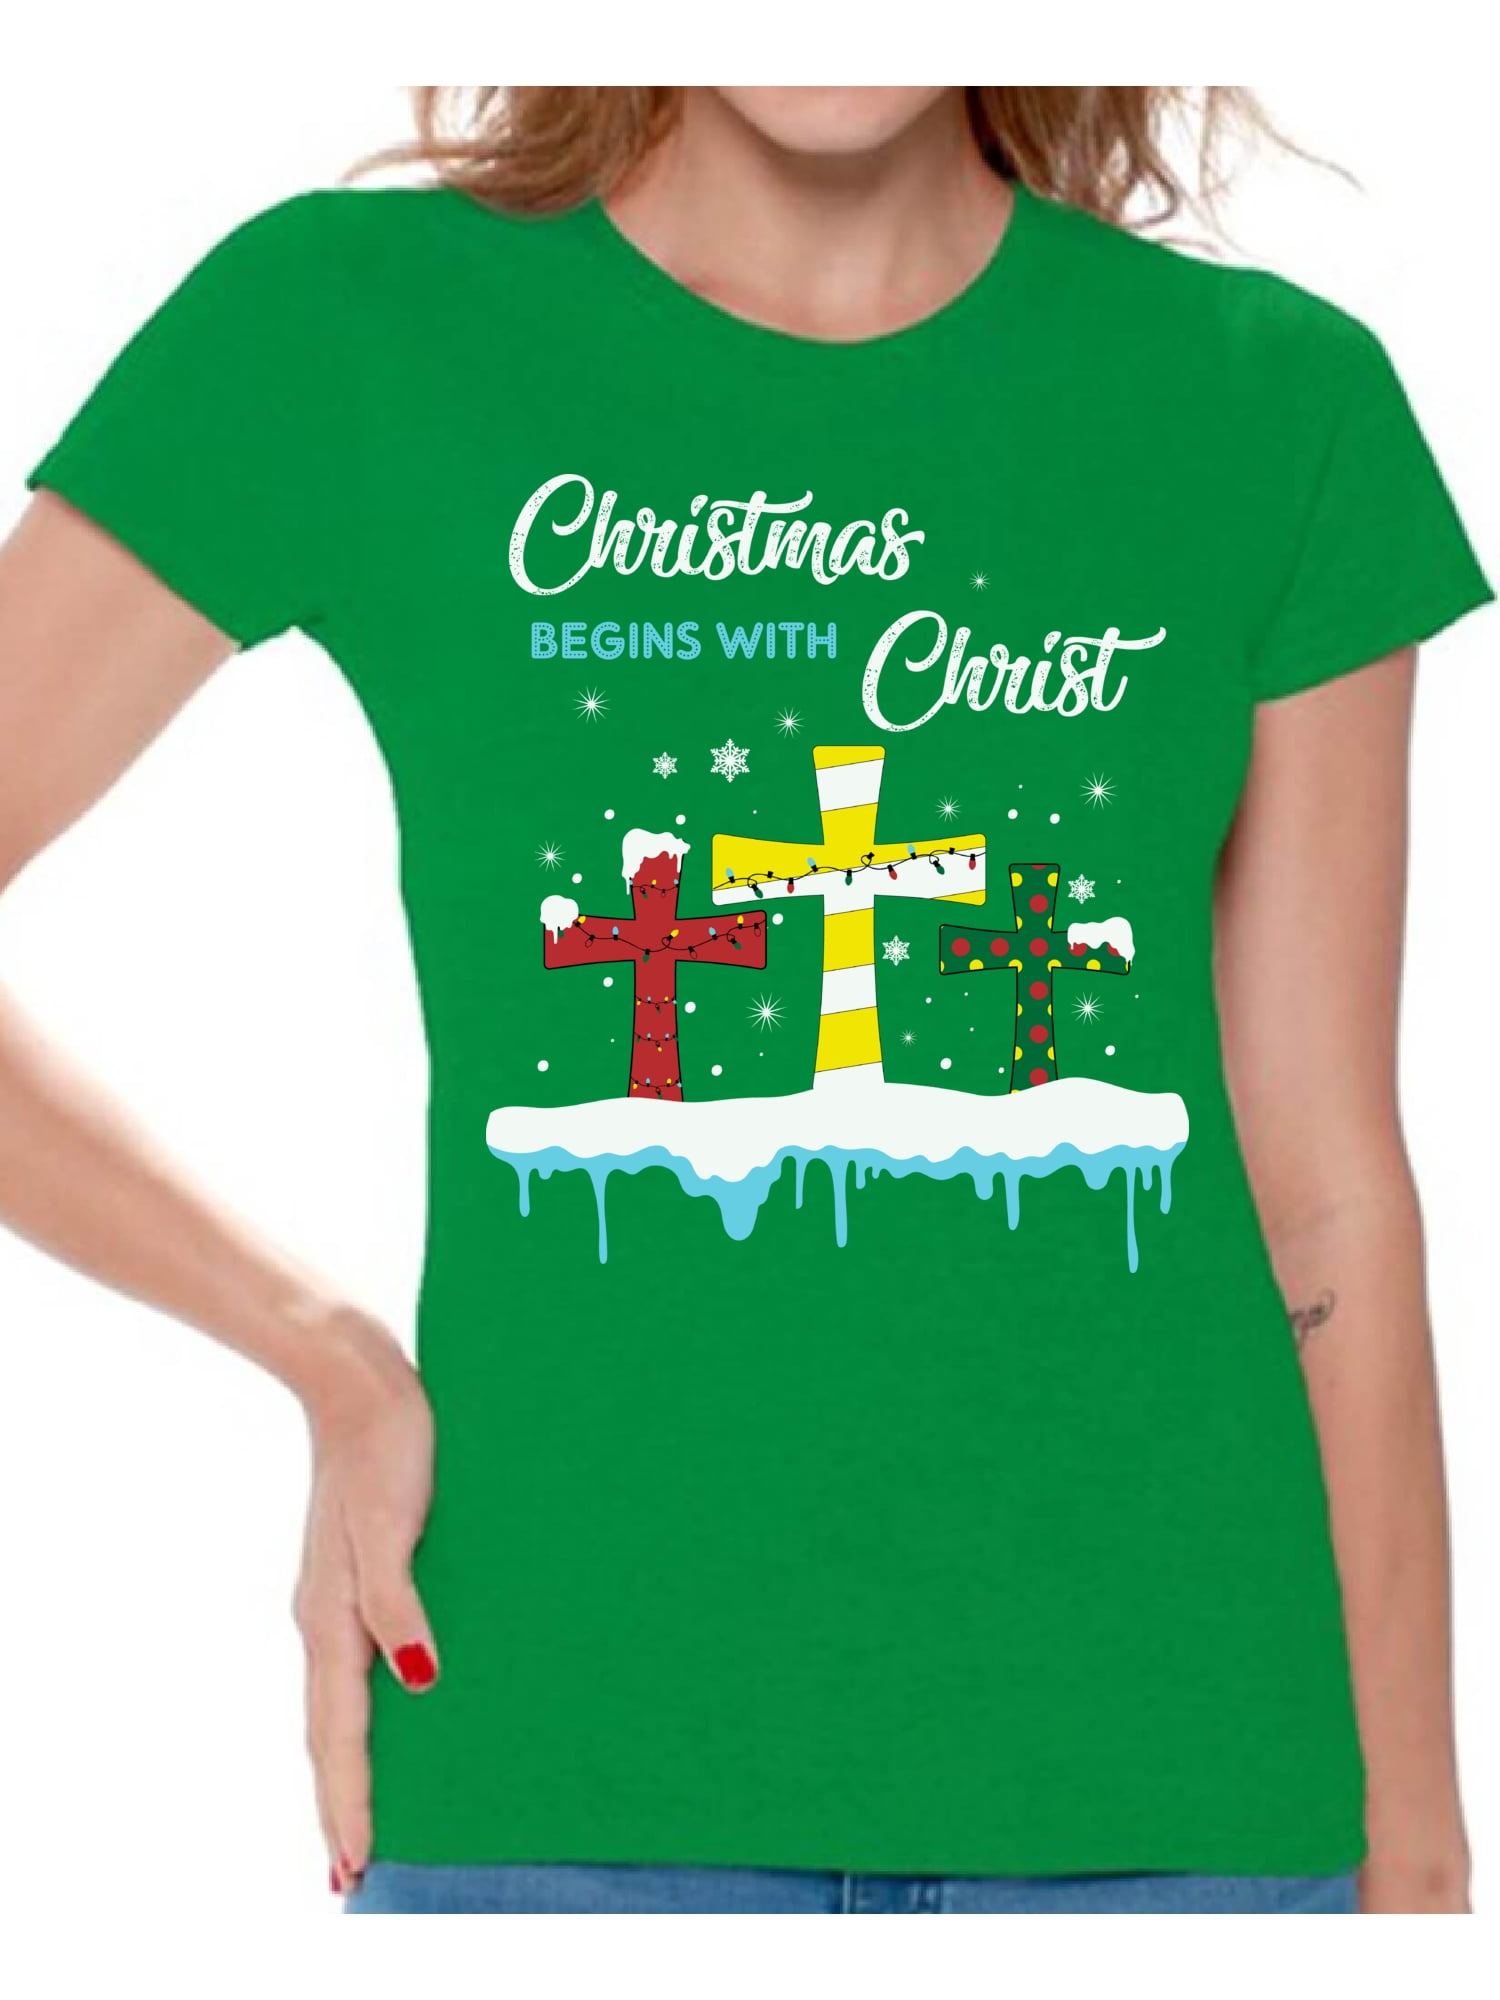 Jolly Script Raglan Funny Christmas Shirt XMas Shirt Holiday Shirt Christmas Words Shirts for Christmas Jolly Shirt 34 Sleeve Raglan